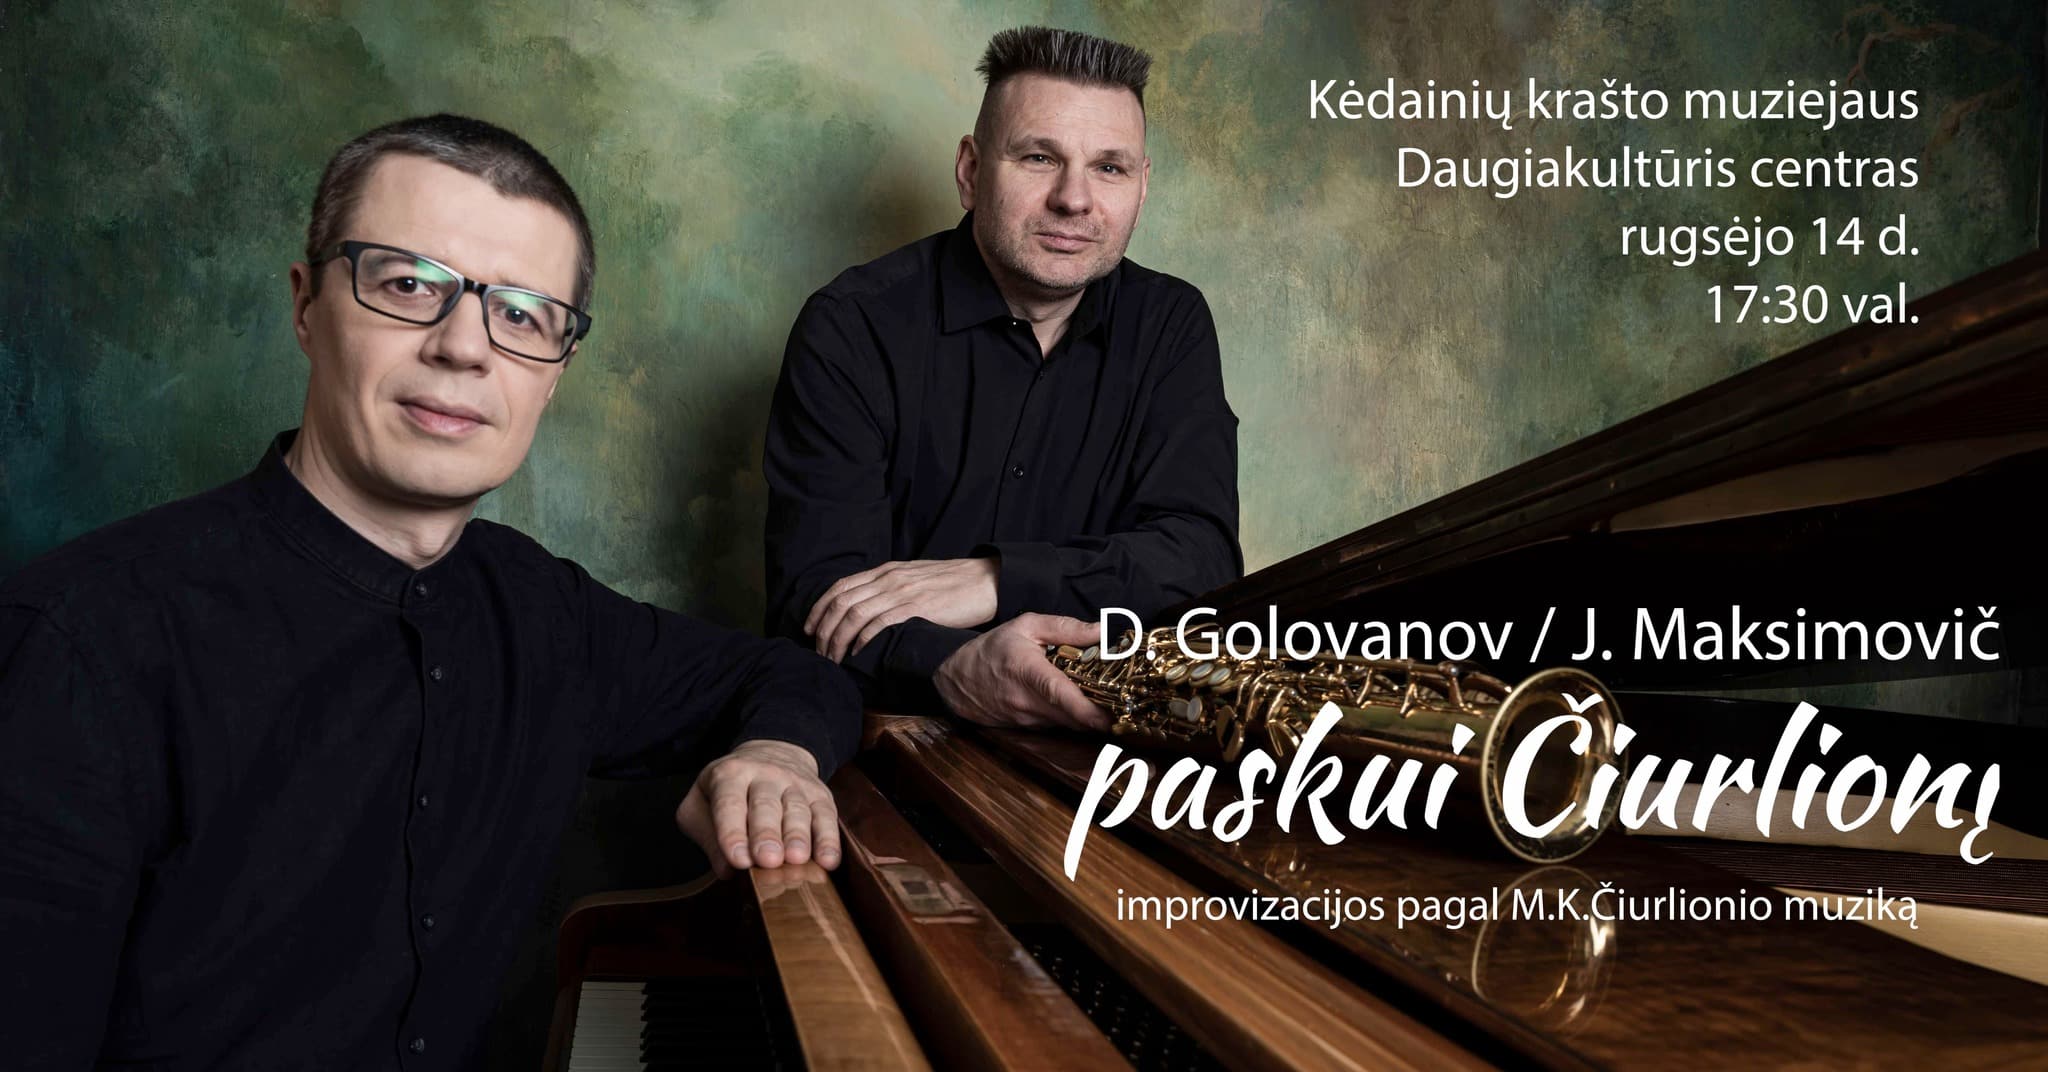 D. Golovanov ir J. Maksimovič improvizacijų pagal M.K. Čiurlionio muziką koncertas „Paskui Čiurlionį“